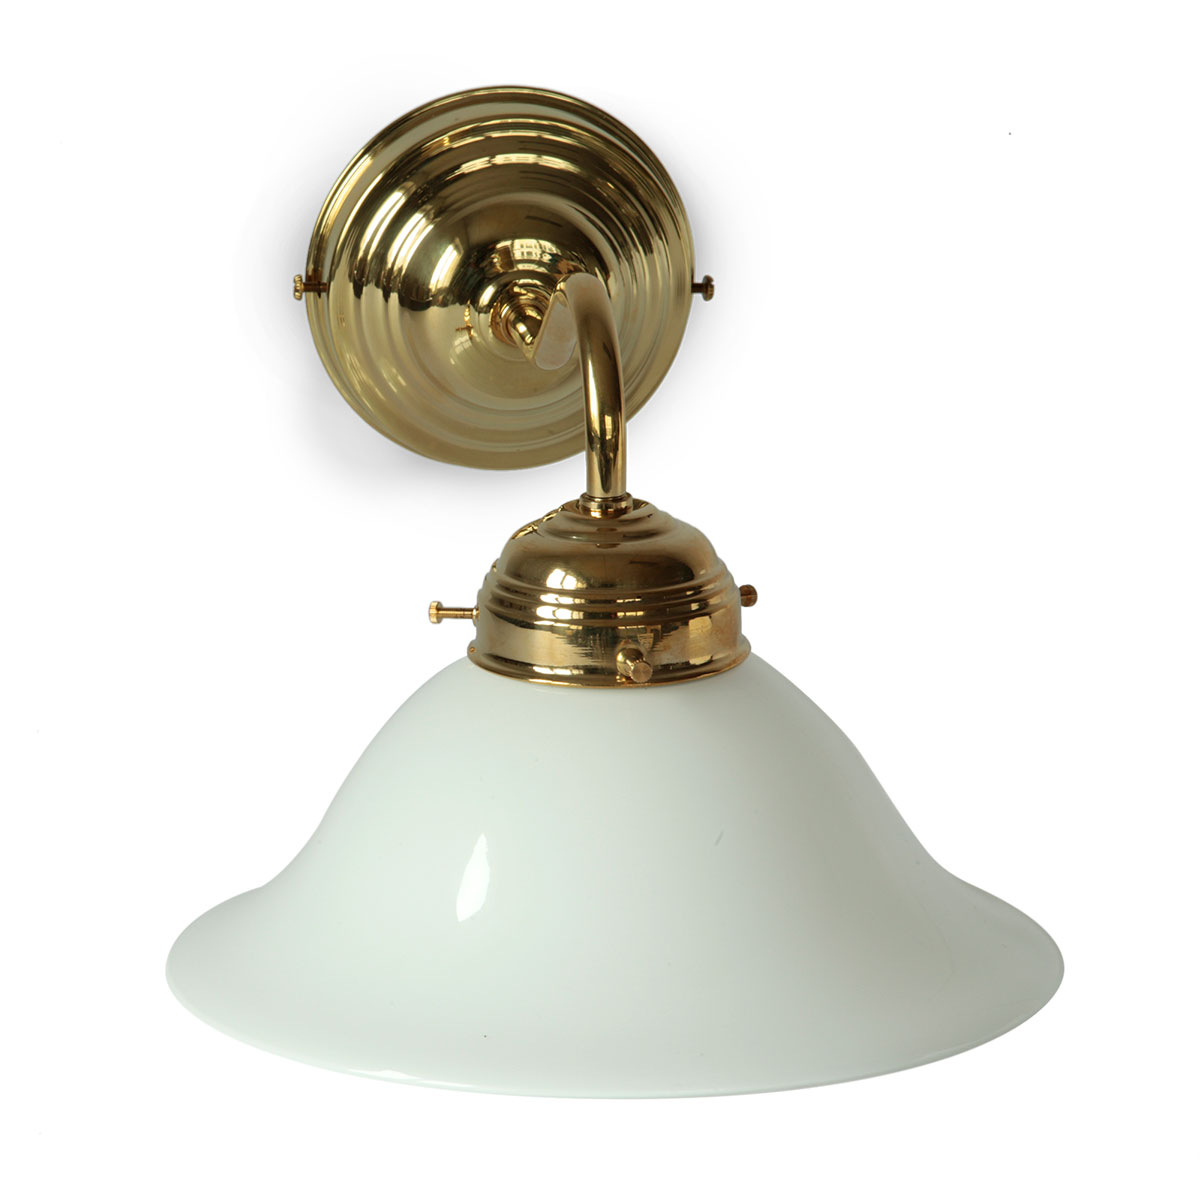 Jugendstil-Wandlampe aus Messing mit Glockenschirm: Messing poliert, lackiert